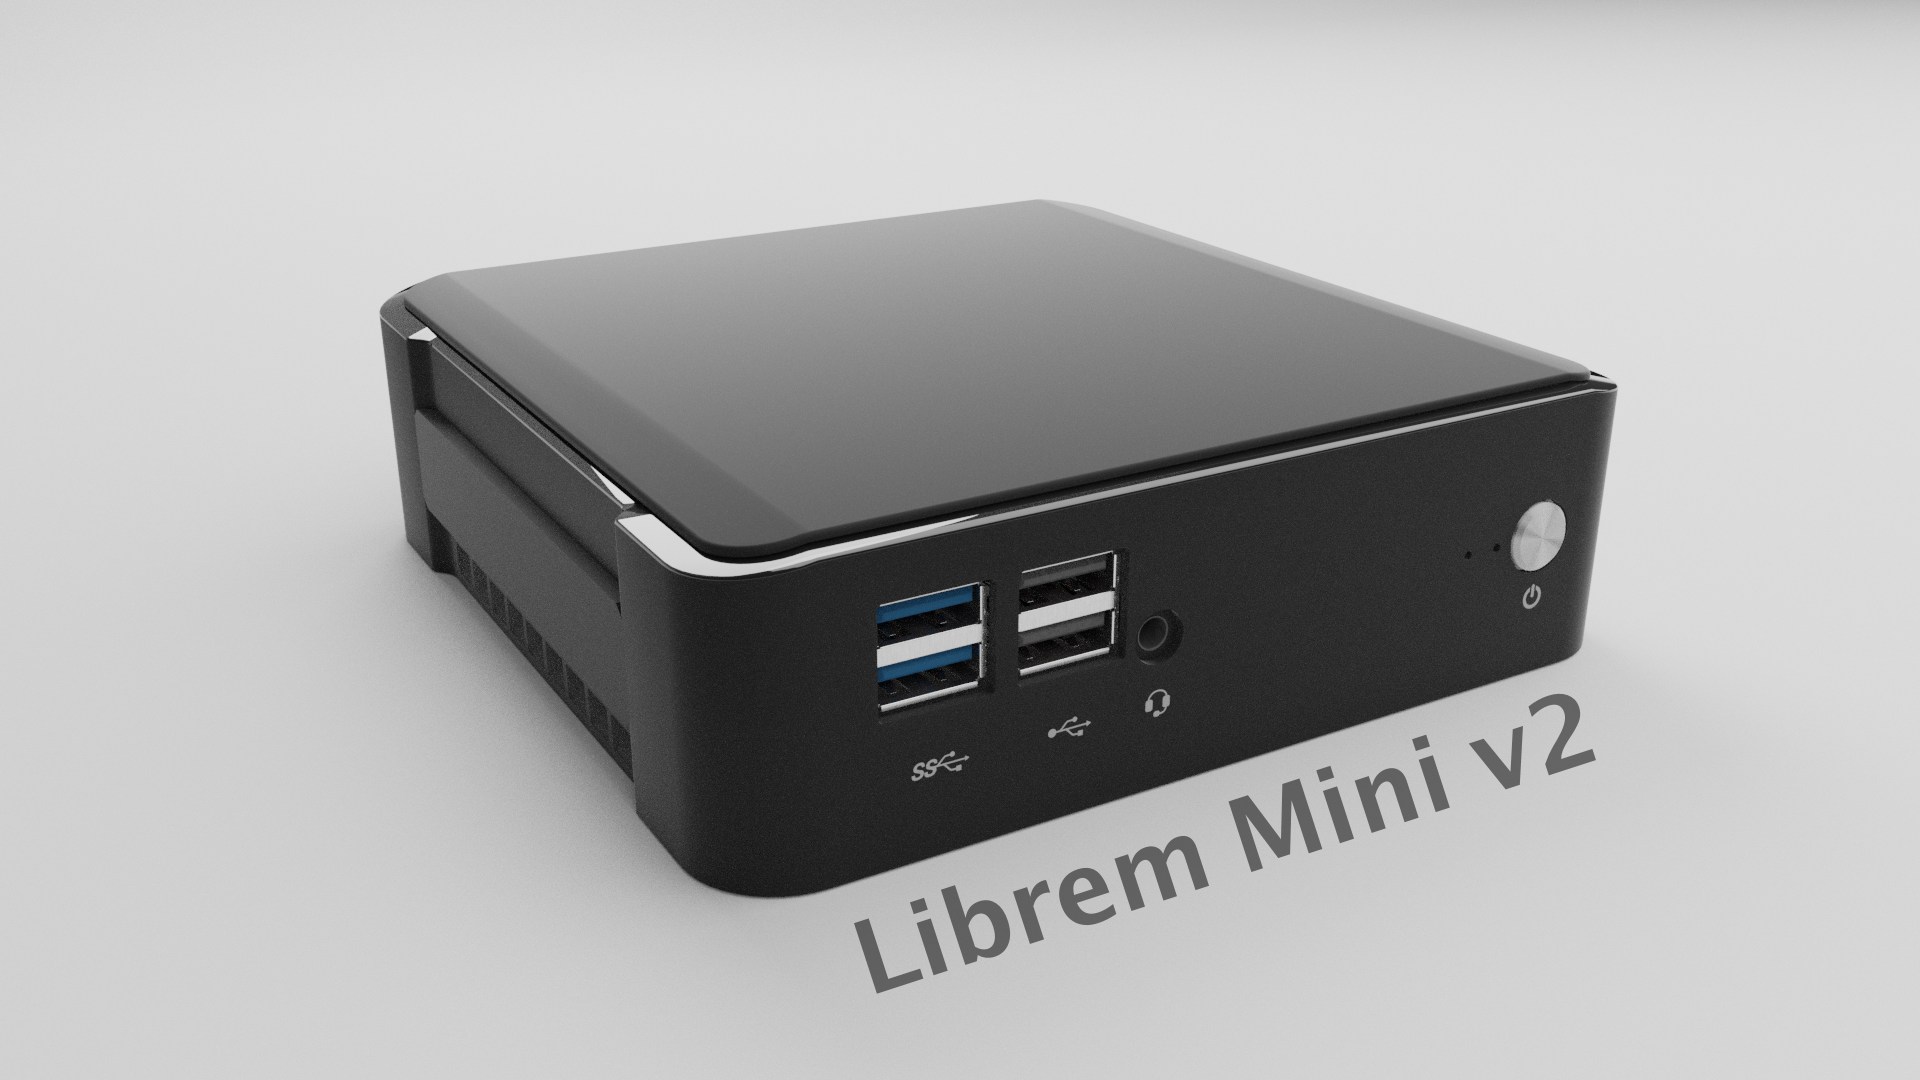 Purism Launches 2nd Gen Librem Mini Linux PC with a 10th Gen Intel Core CPU